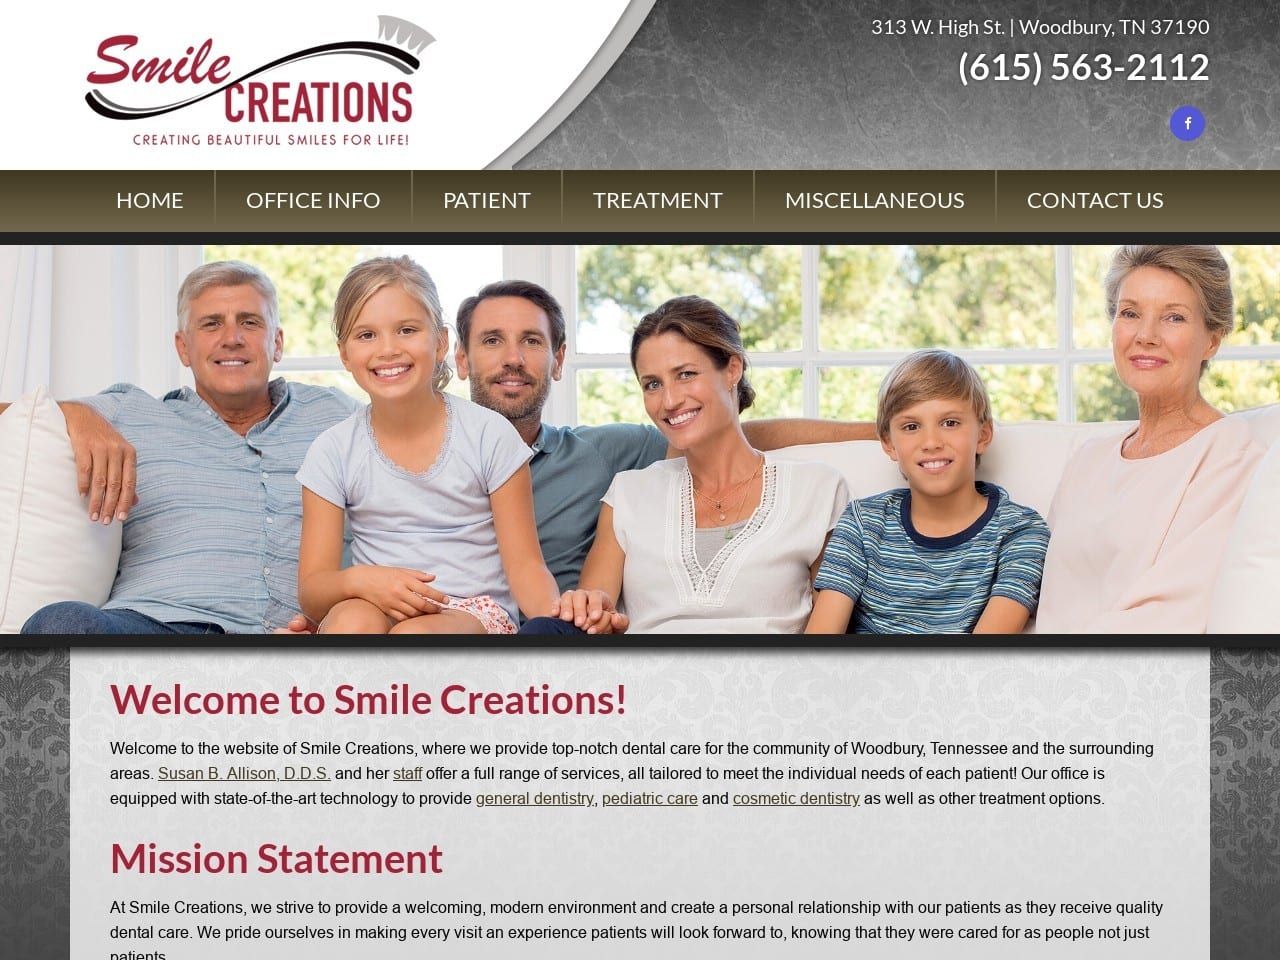 Smile Creations Website Screenshot from smilecreationstn.com